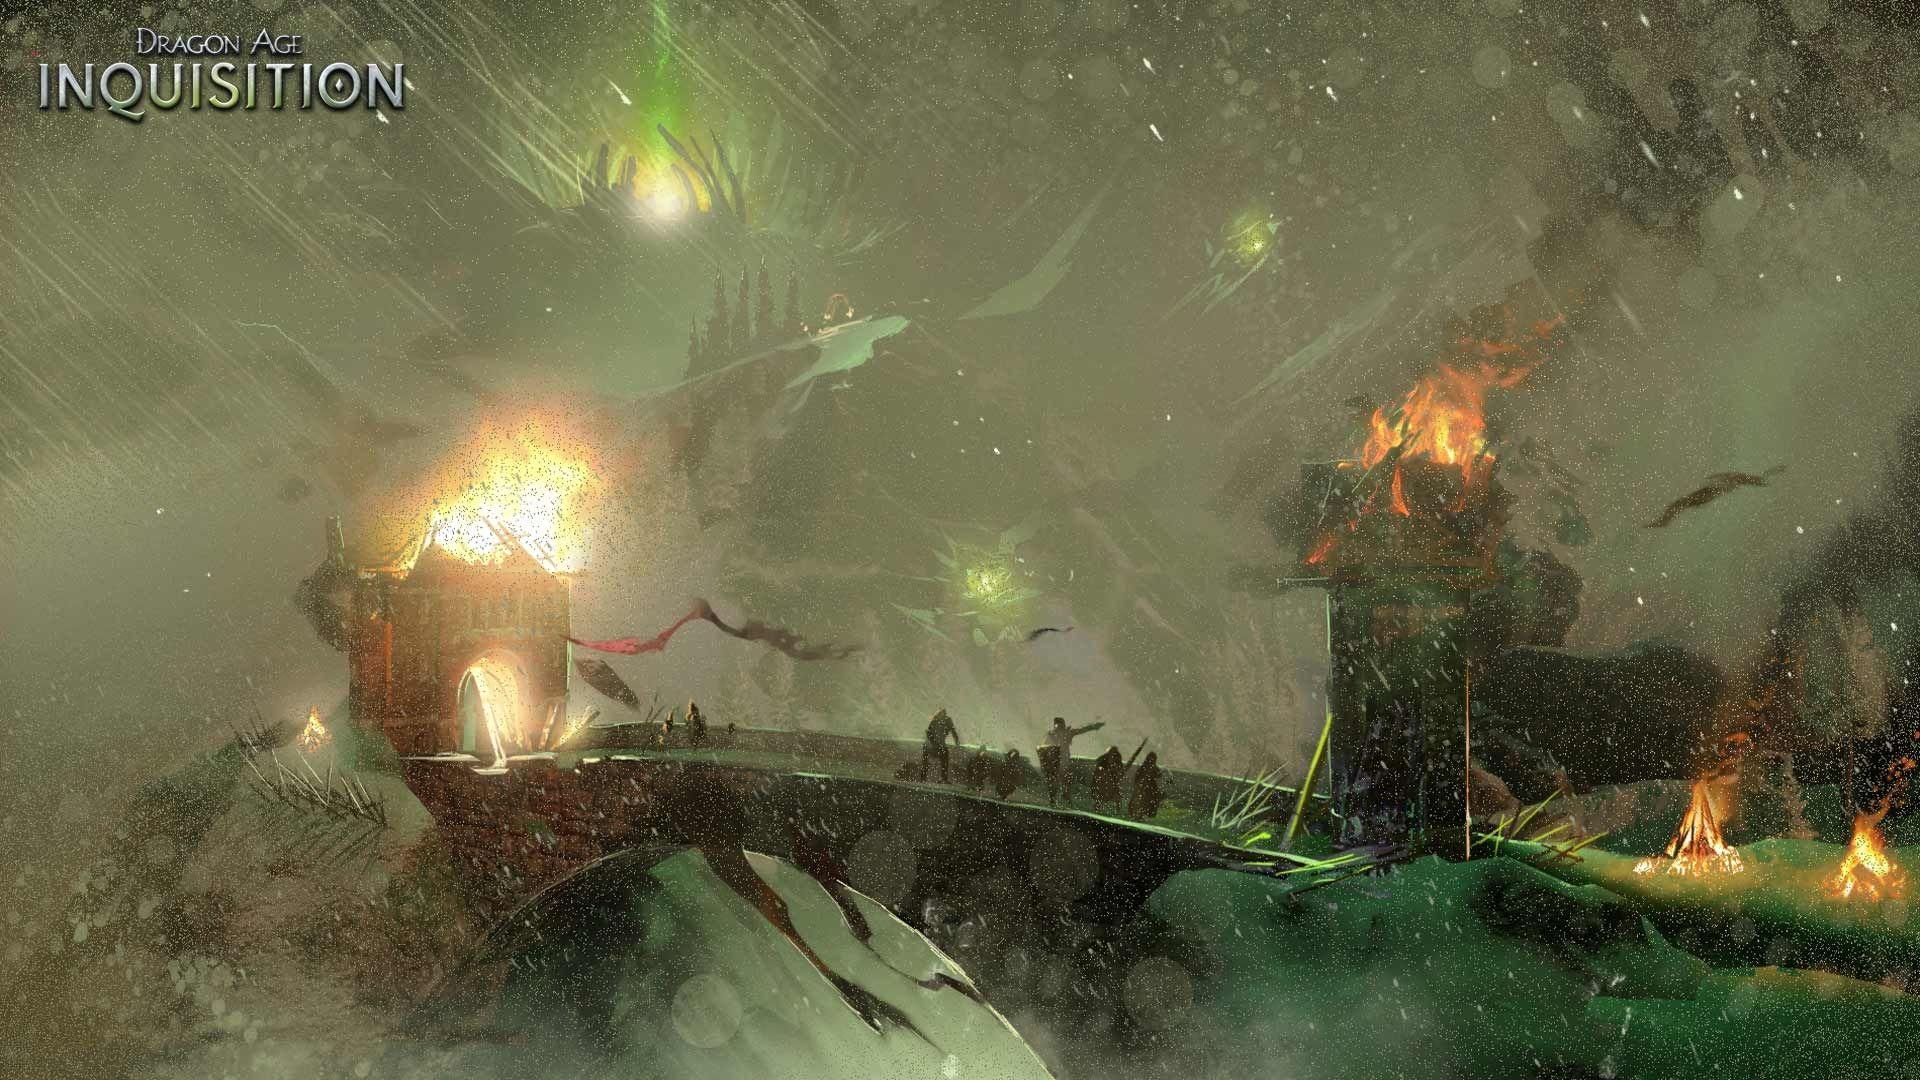 Dragon Age: Inquisition Wallpaper, Picture, Image